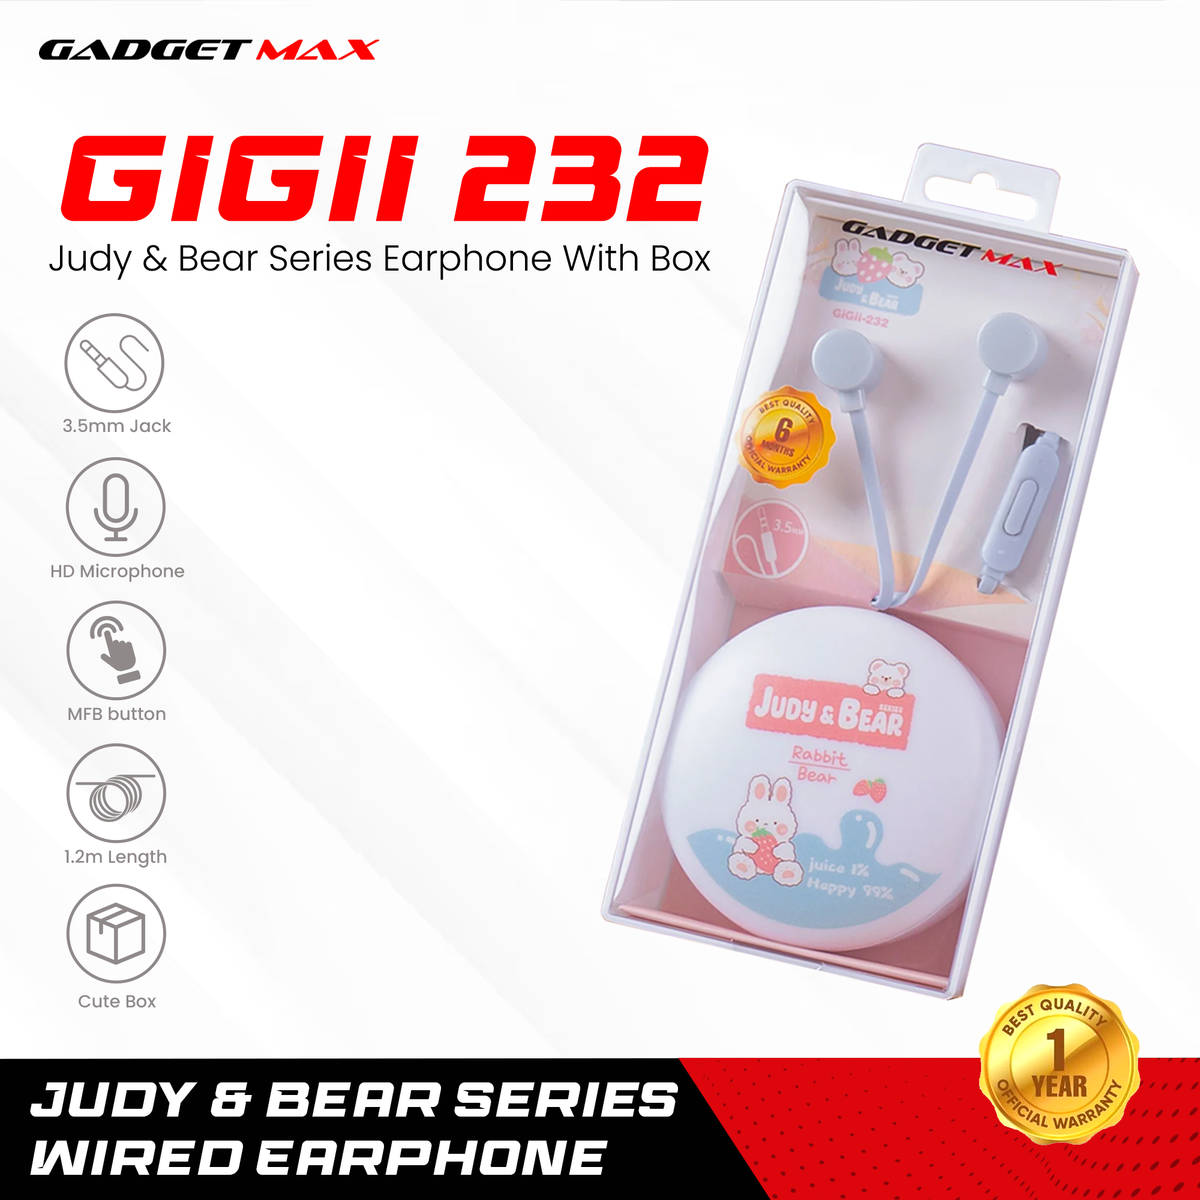 GADGET MAX GIGII-232 JUDY&BEAR SERIES 3.5MM WIRED EARPHONE - BLUE